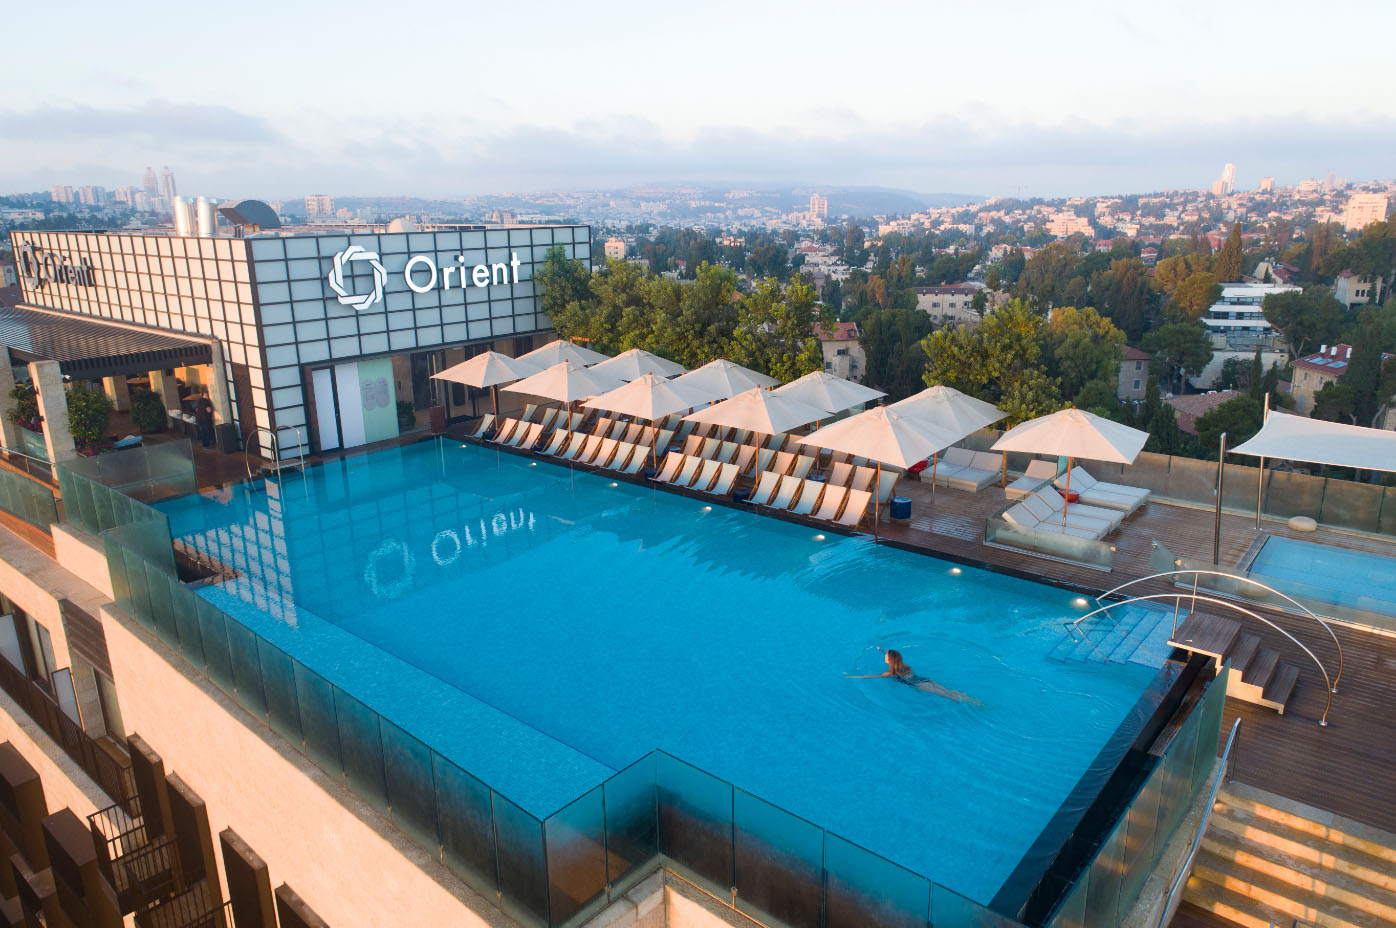 Orient Roof pool